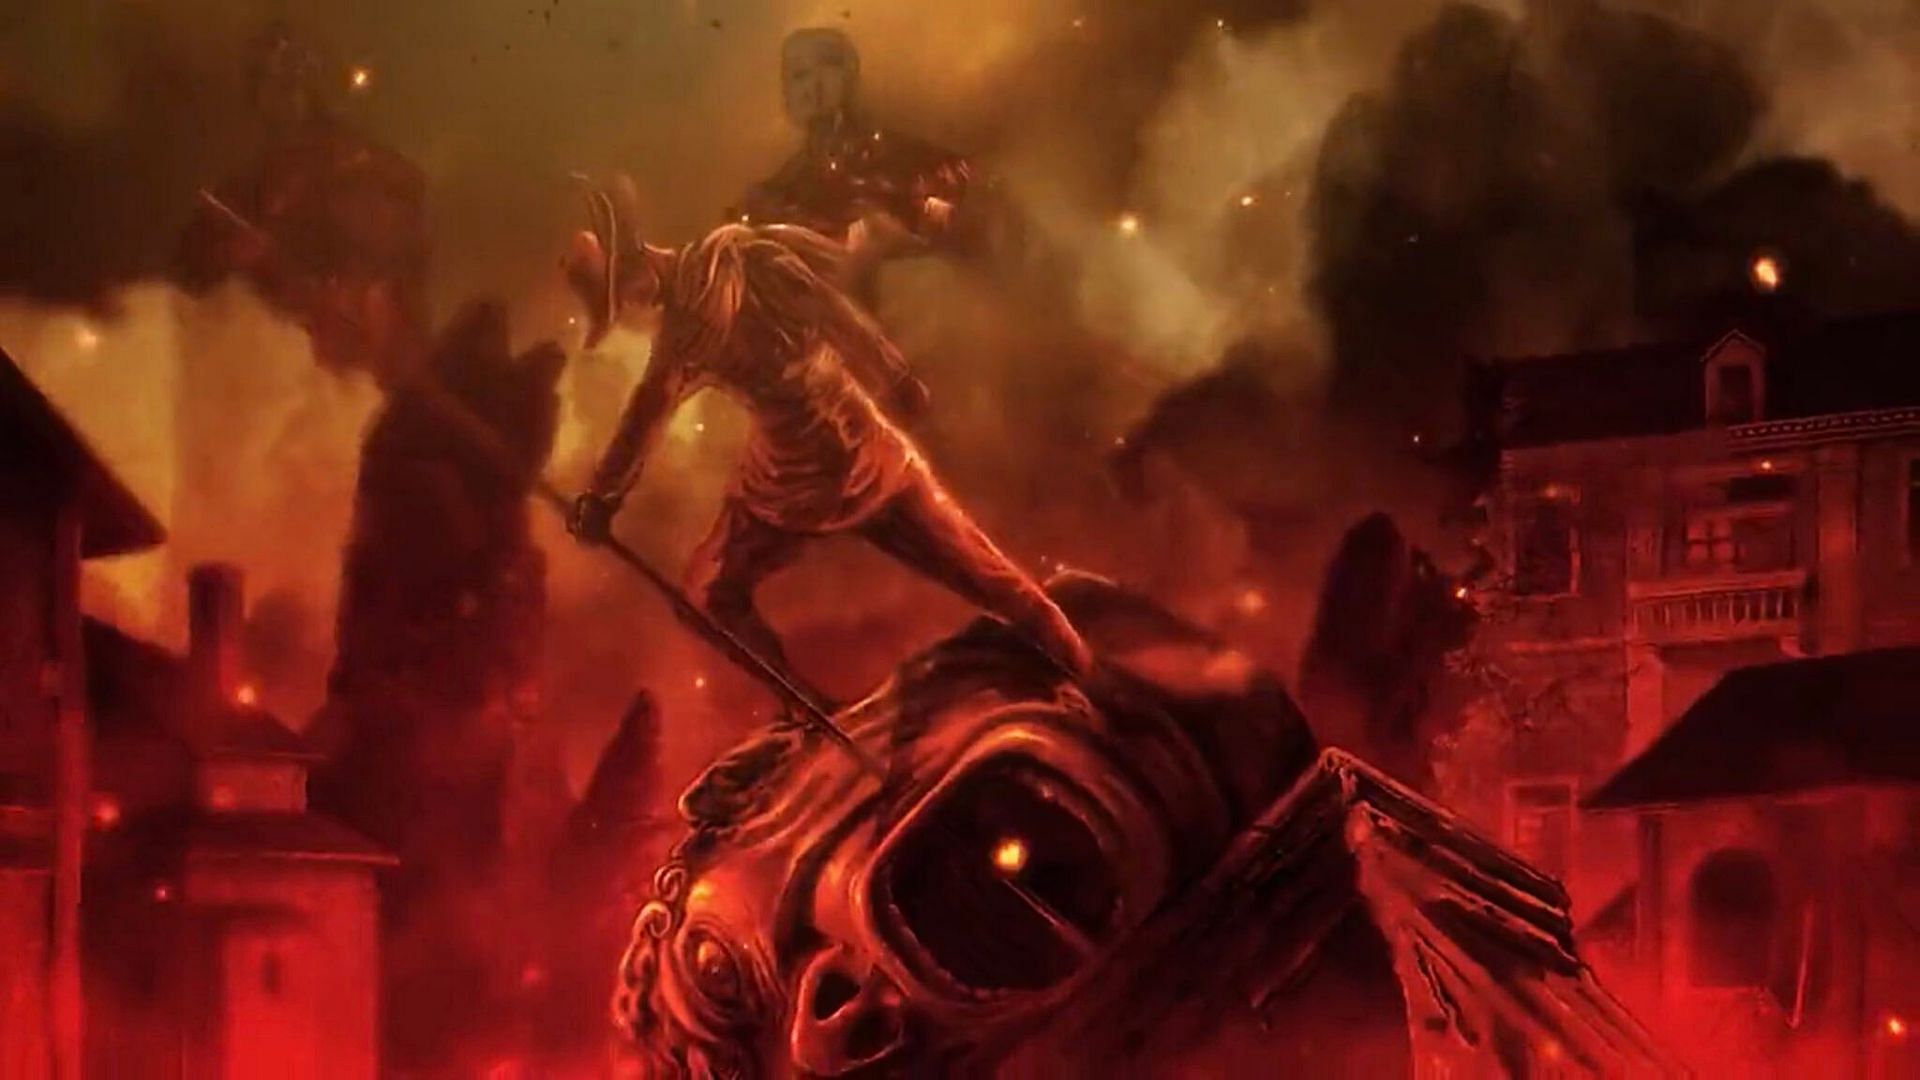 Attack on Titan Season 4 Part 3 - Official Main Trailer